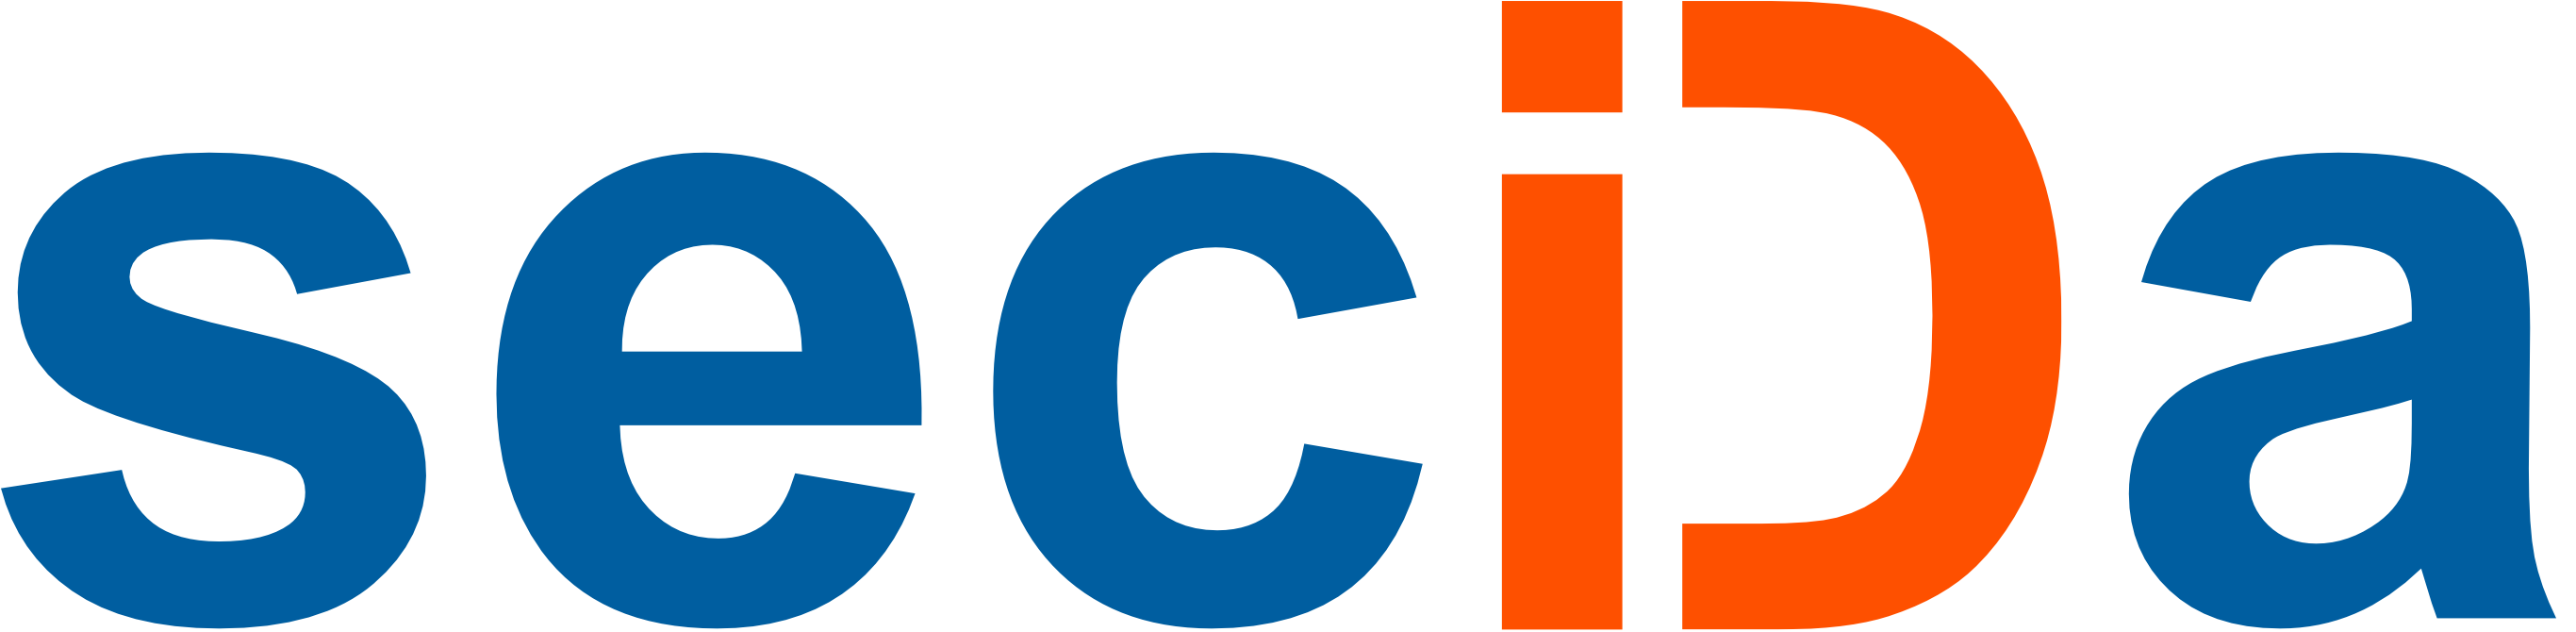 Secida Logo _002_